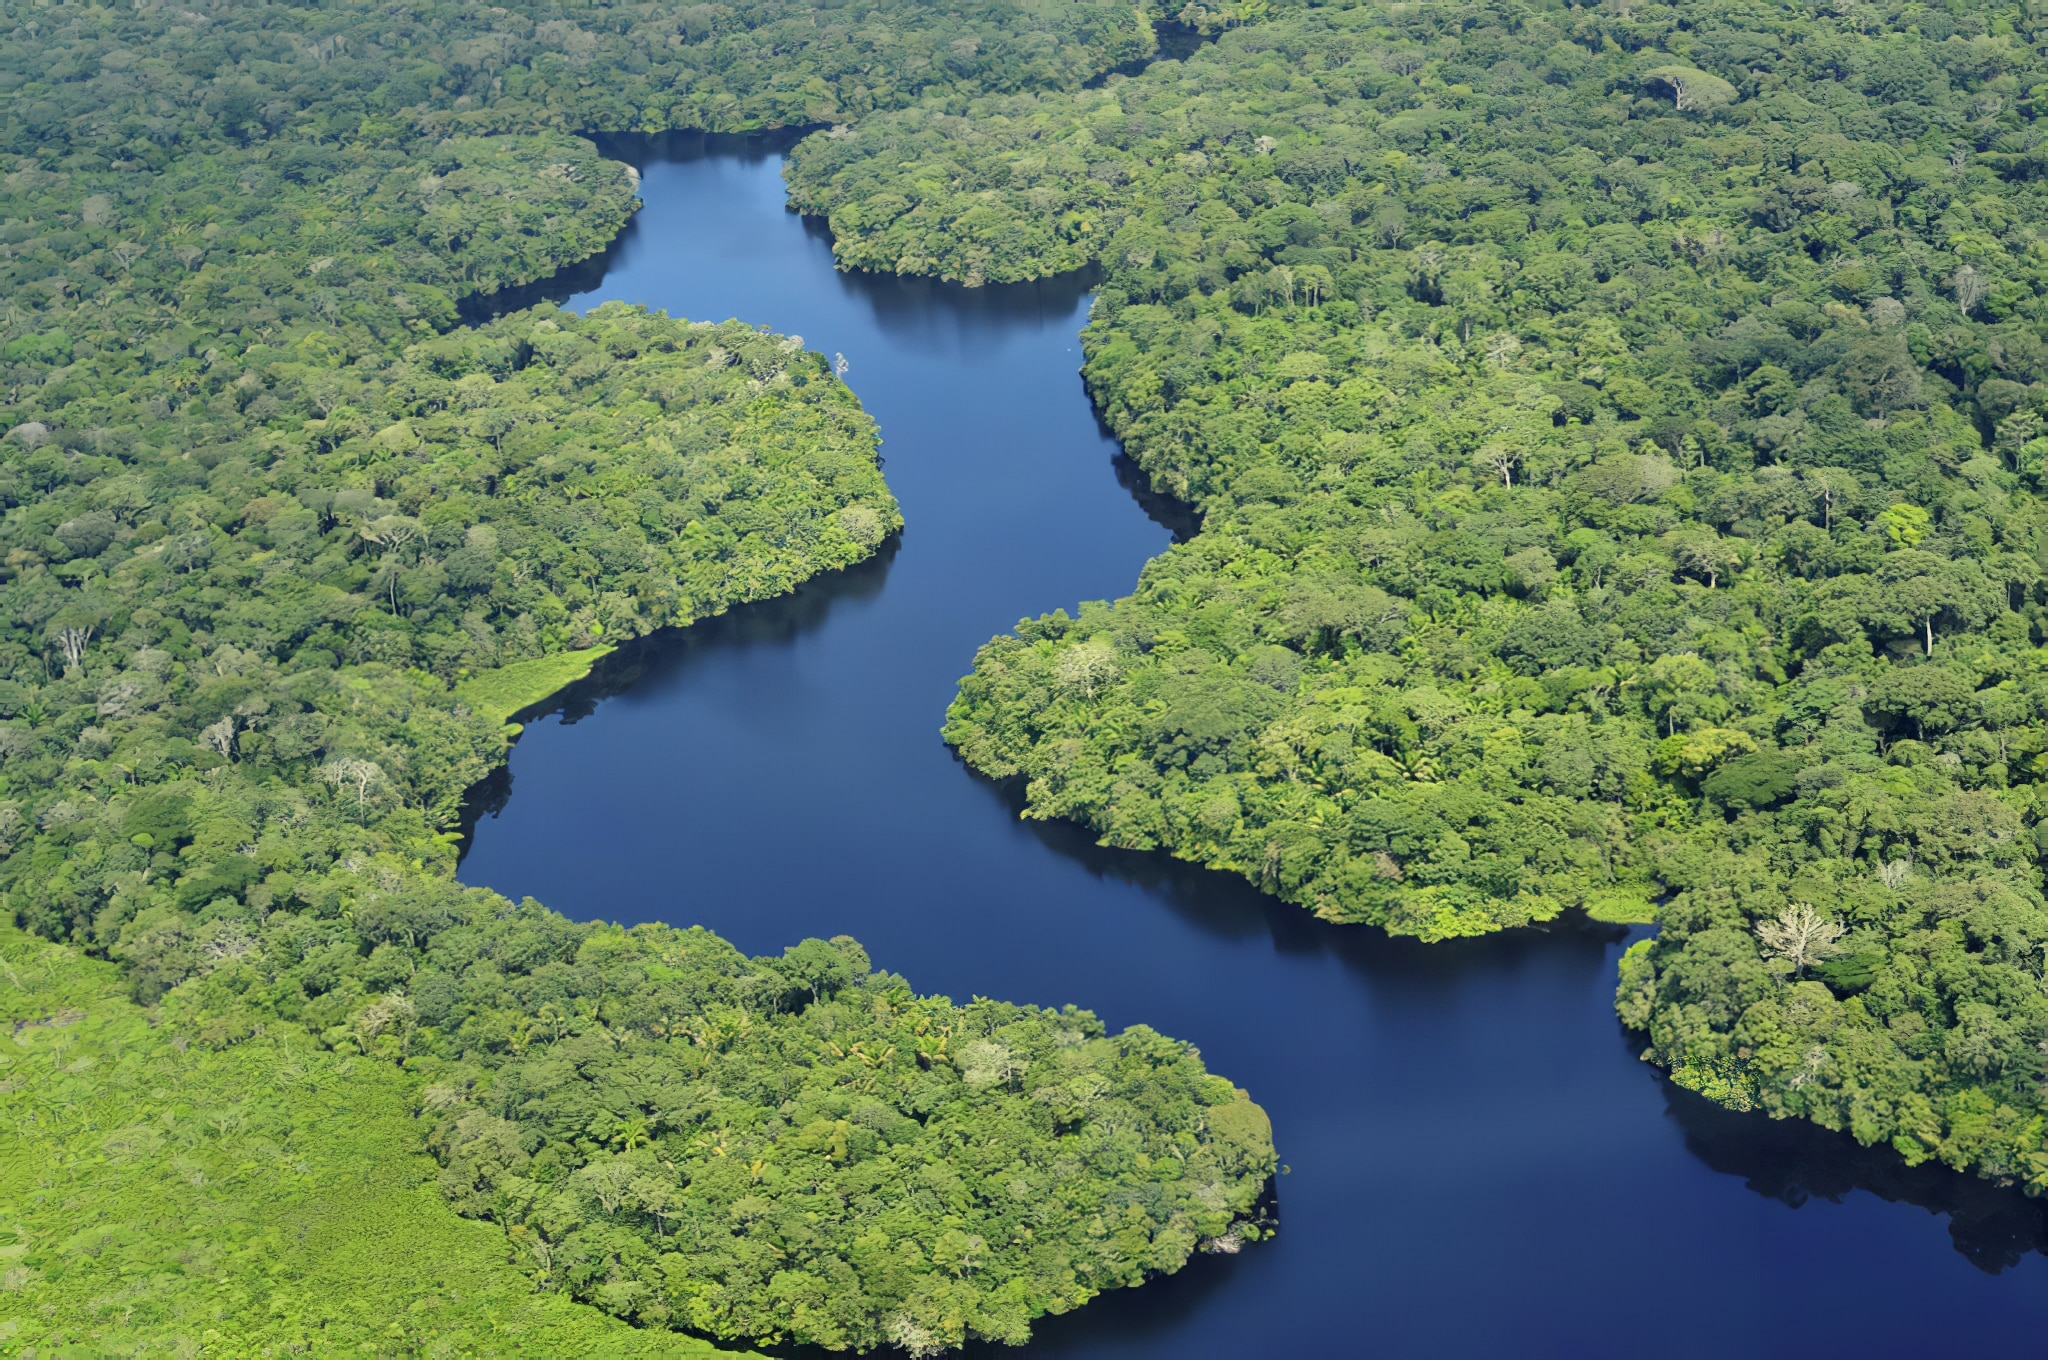 Forêt Amazonienne